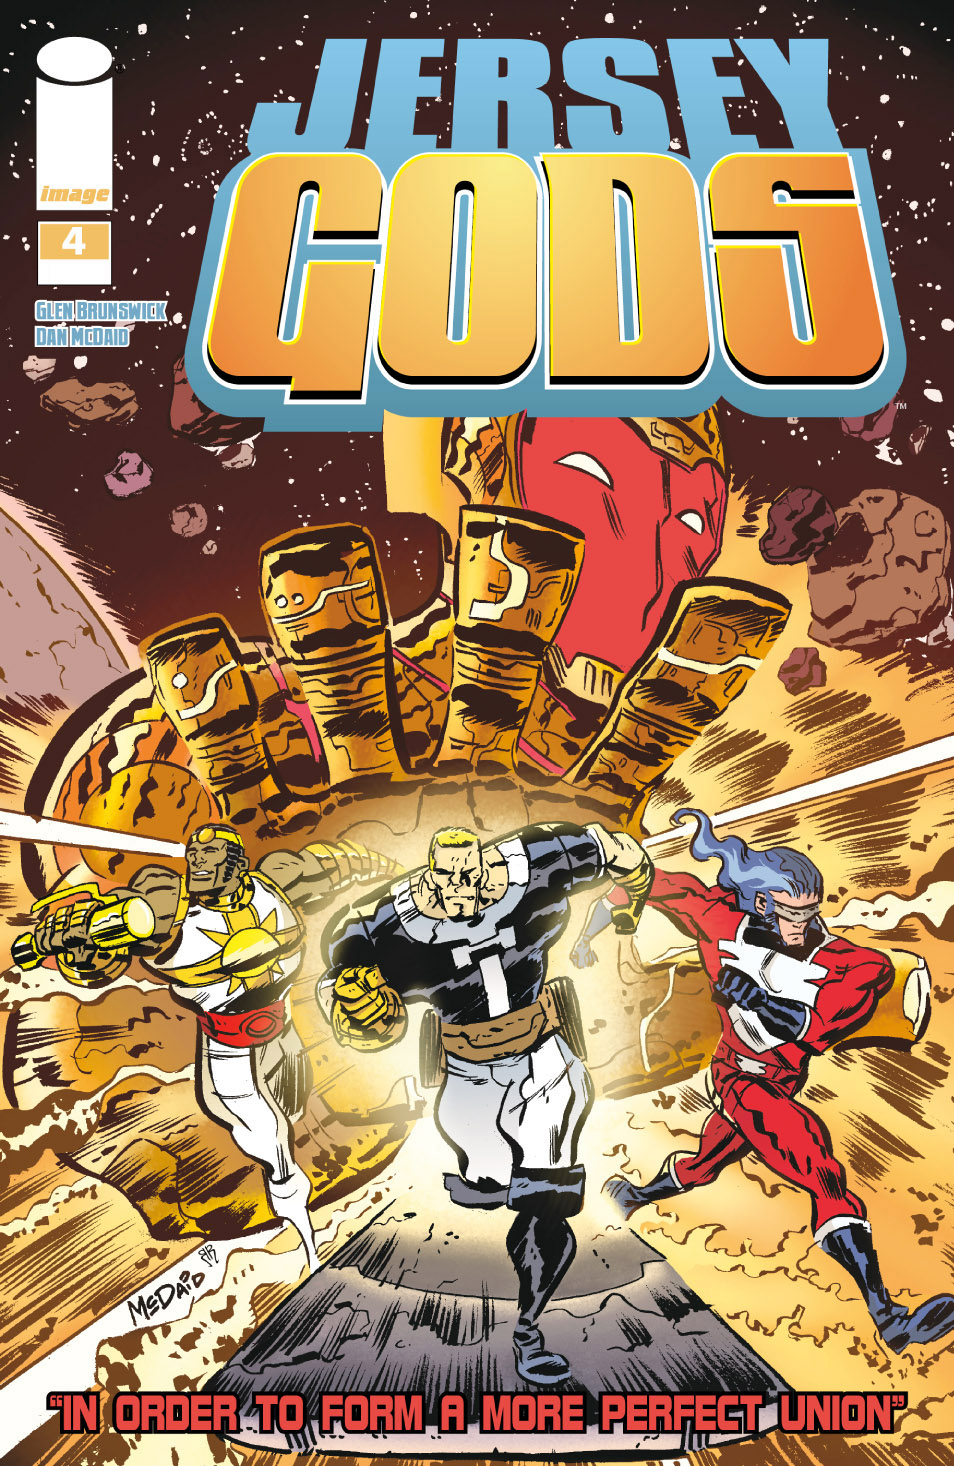 Read online Jersey Gods comic -  Issue #4 - 2